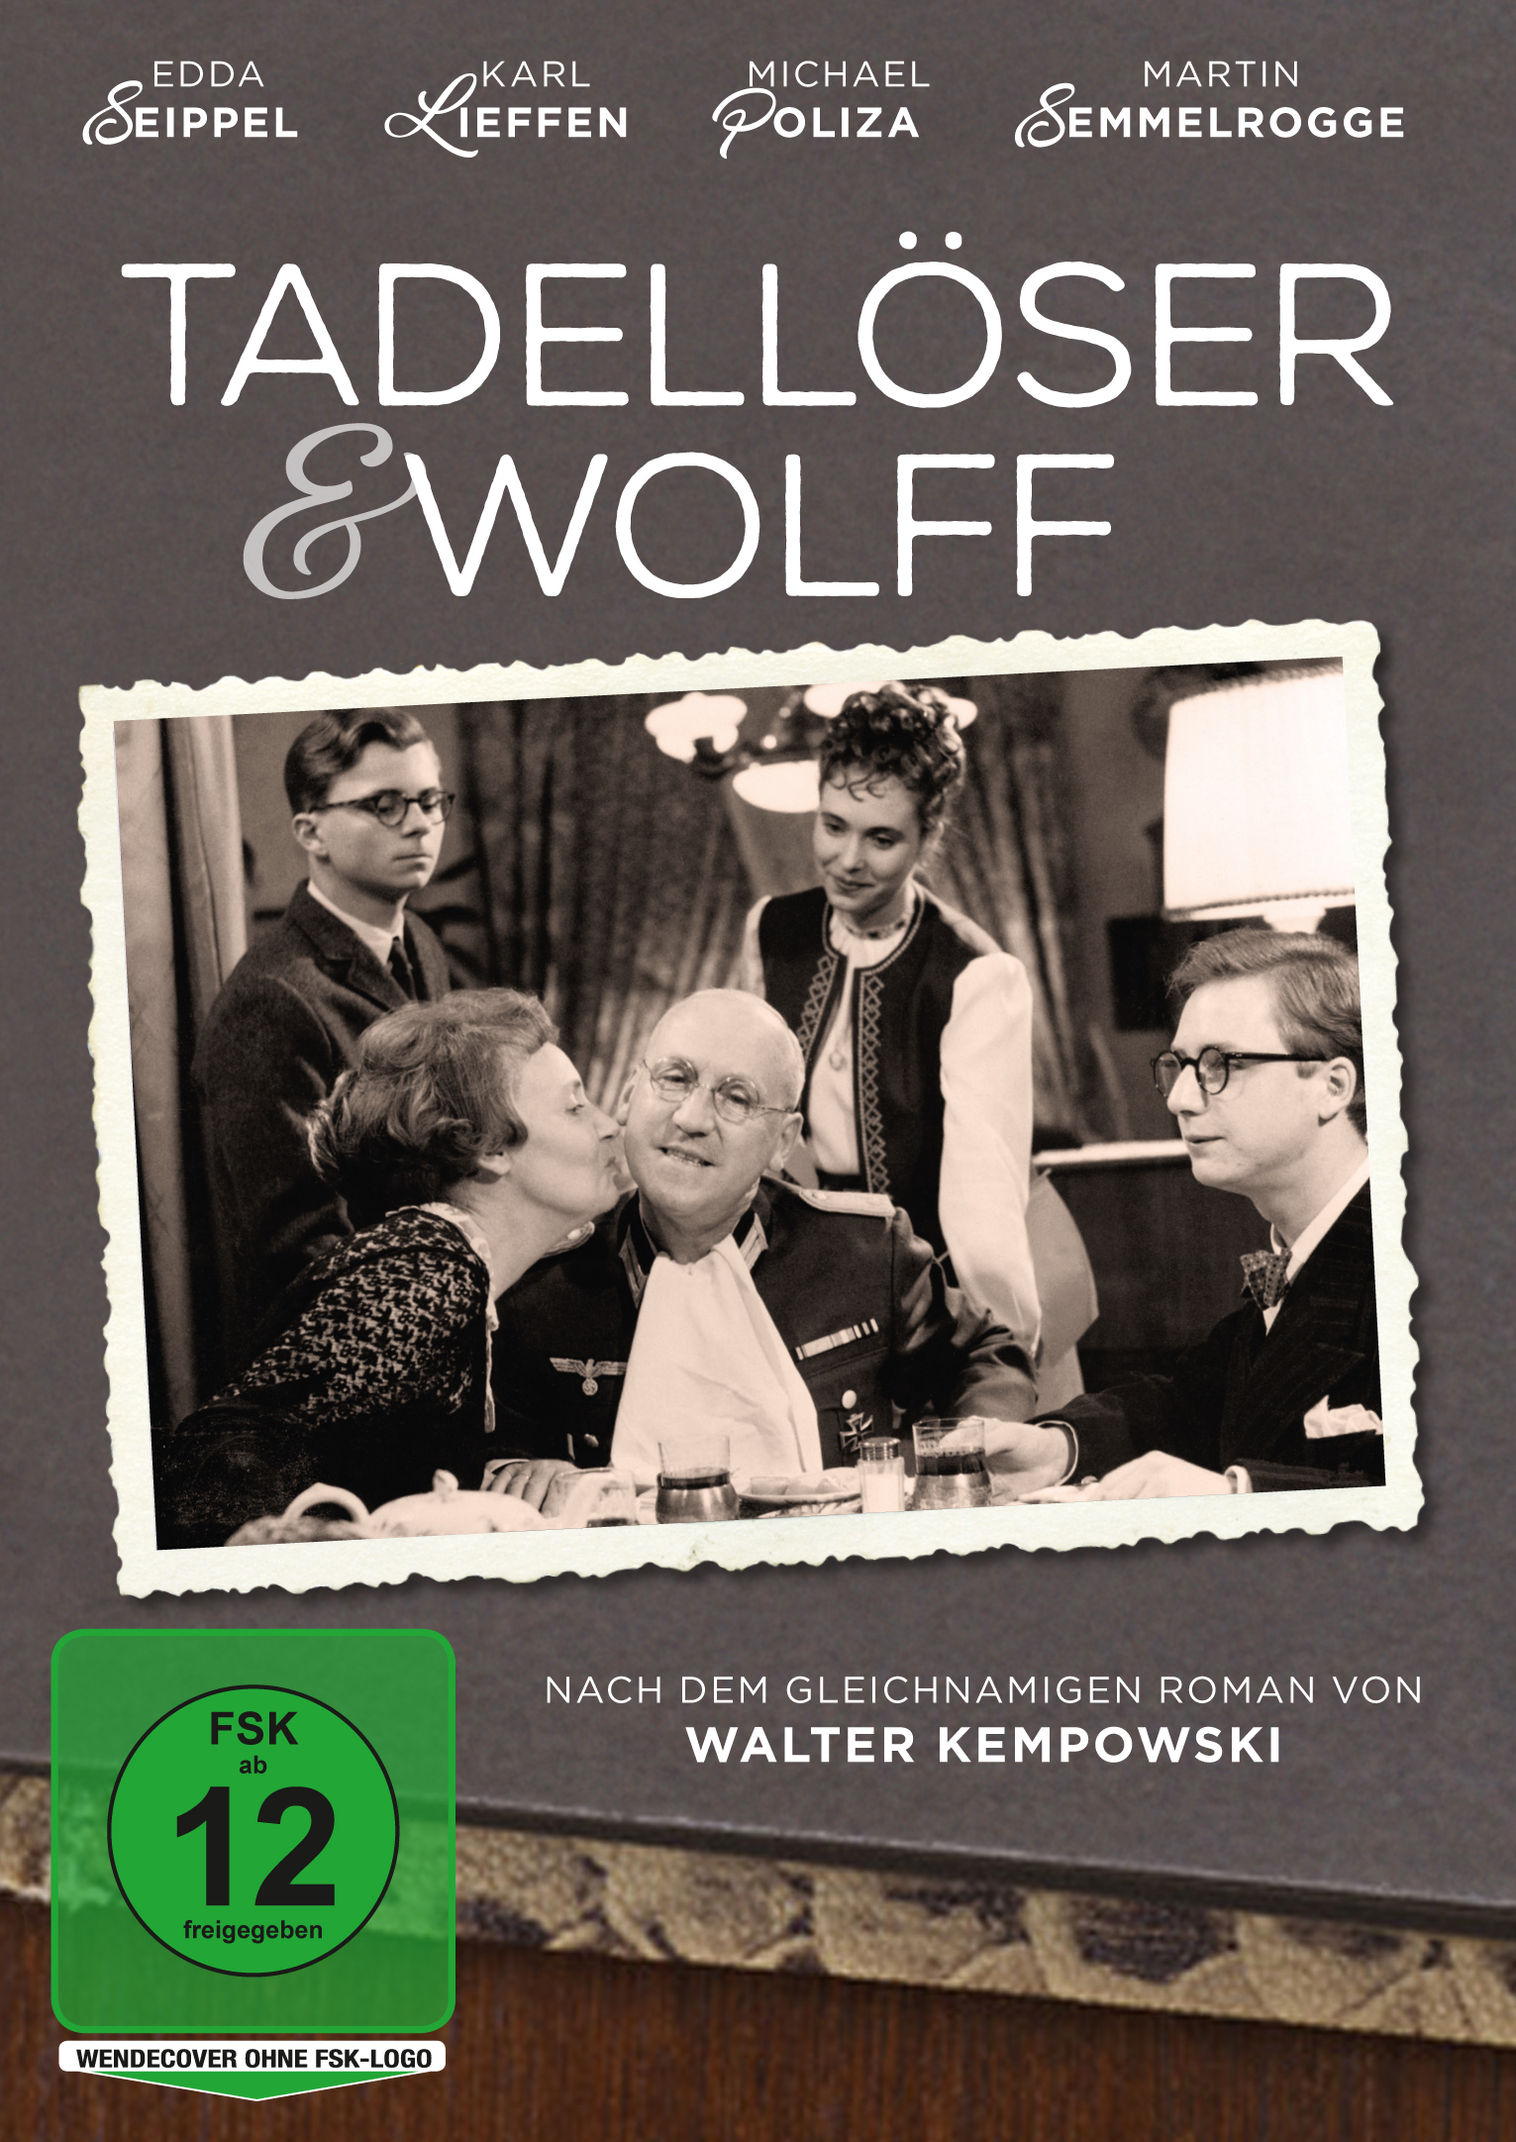 Tadellöser & Wolff, DVD DVD bei Weltbild.de bestellen